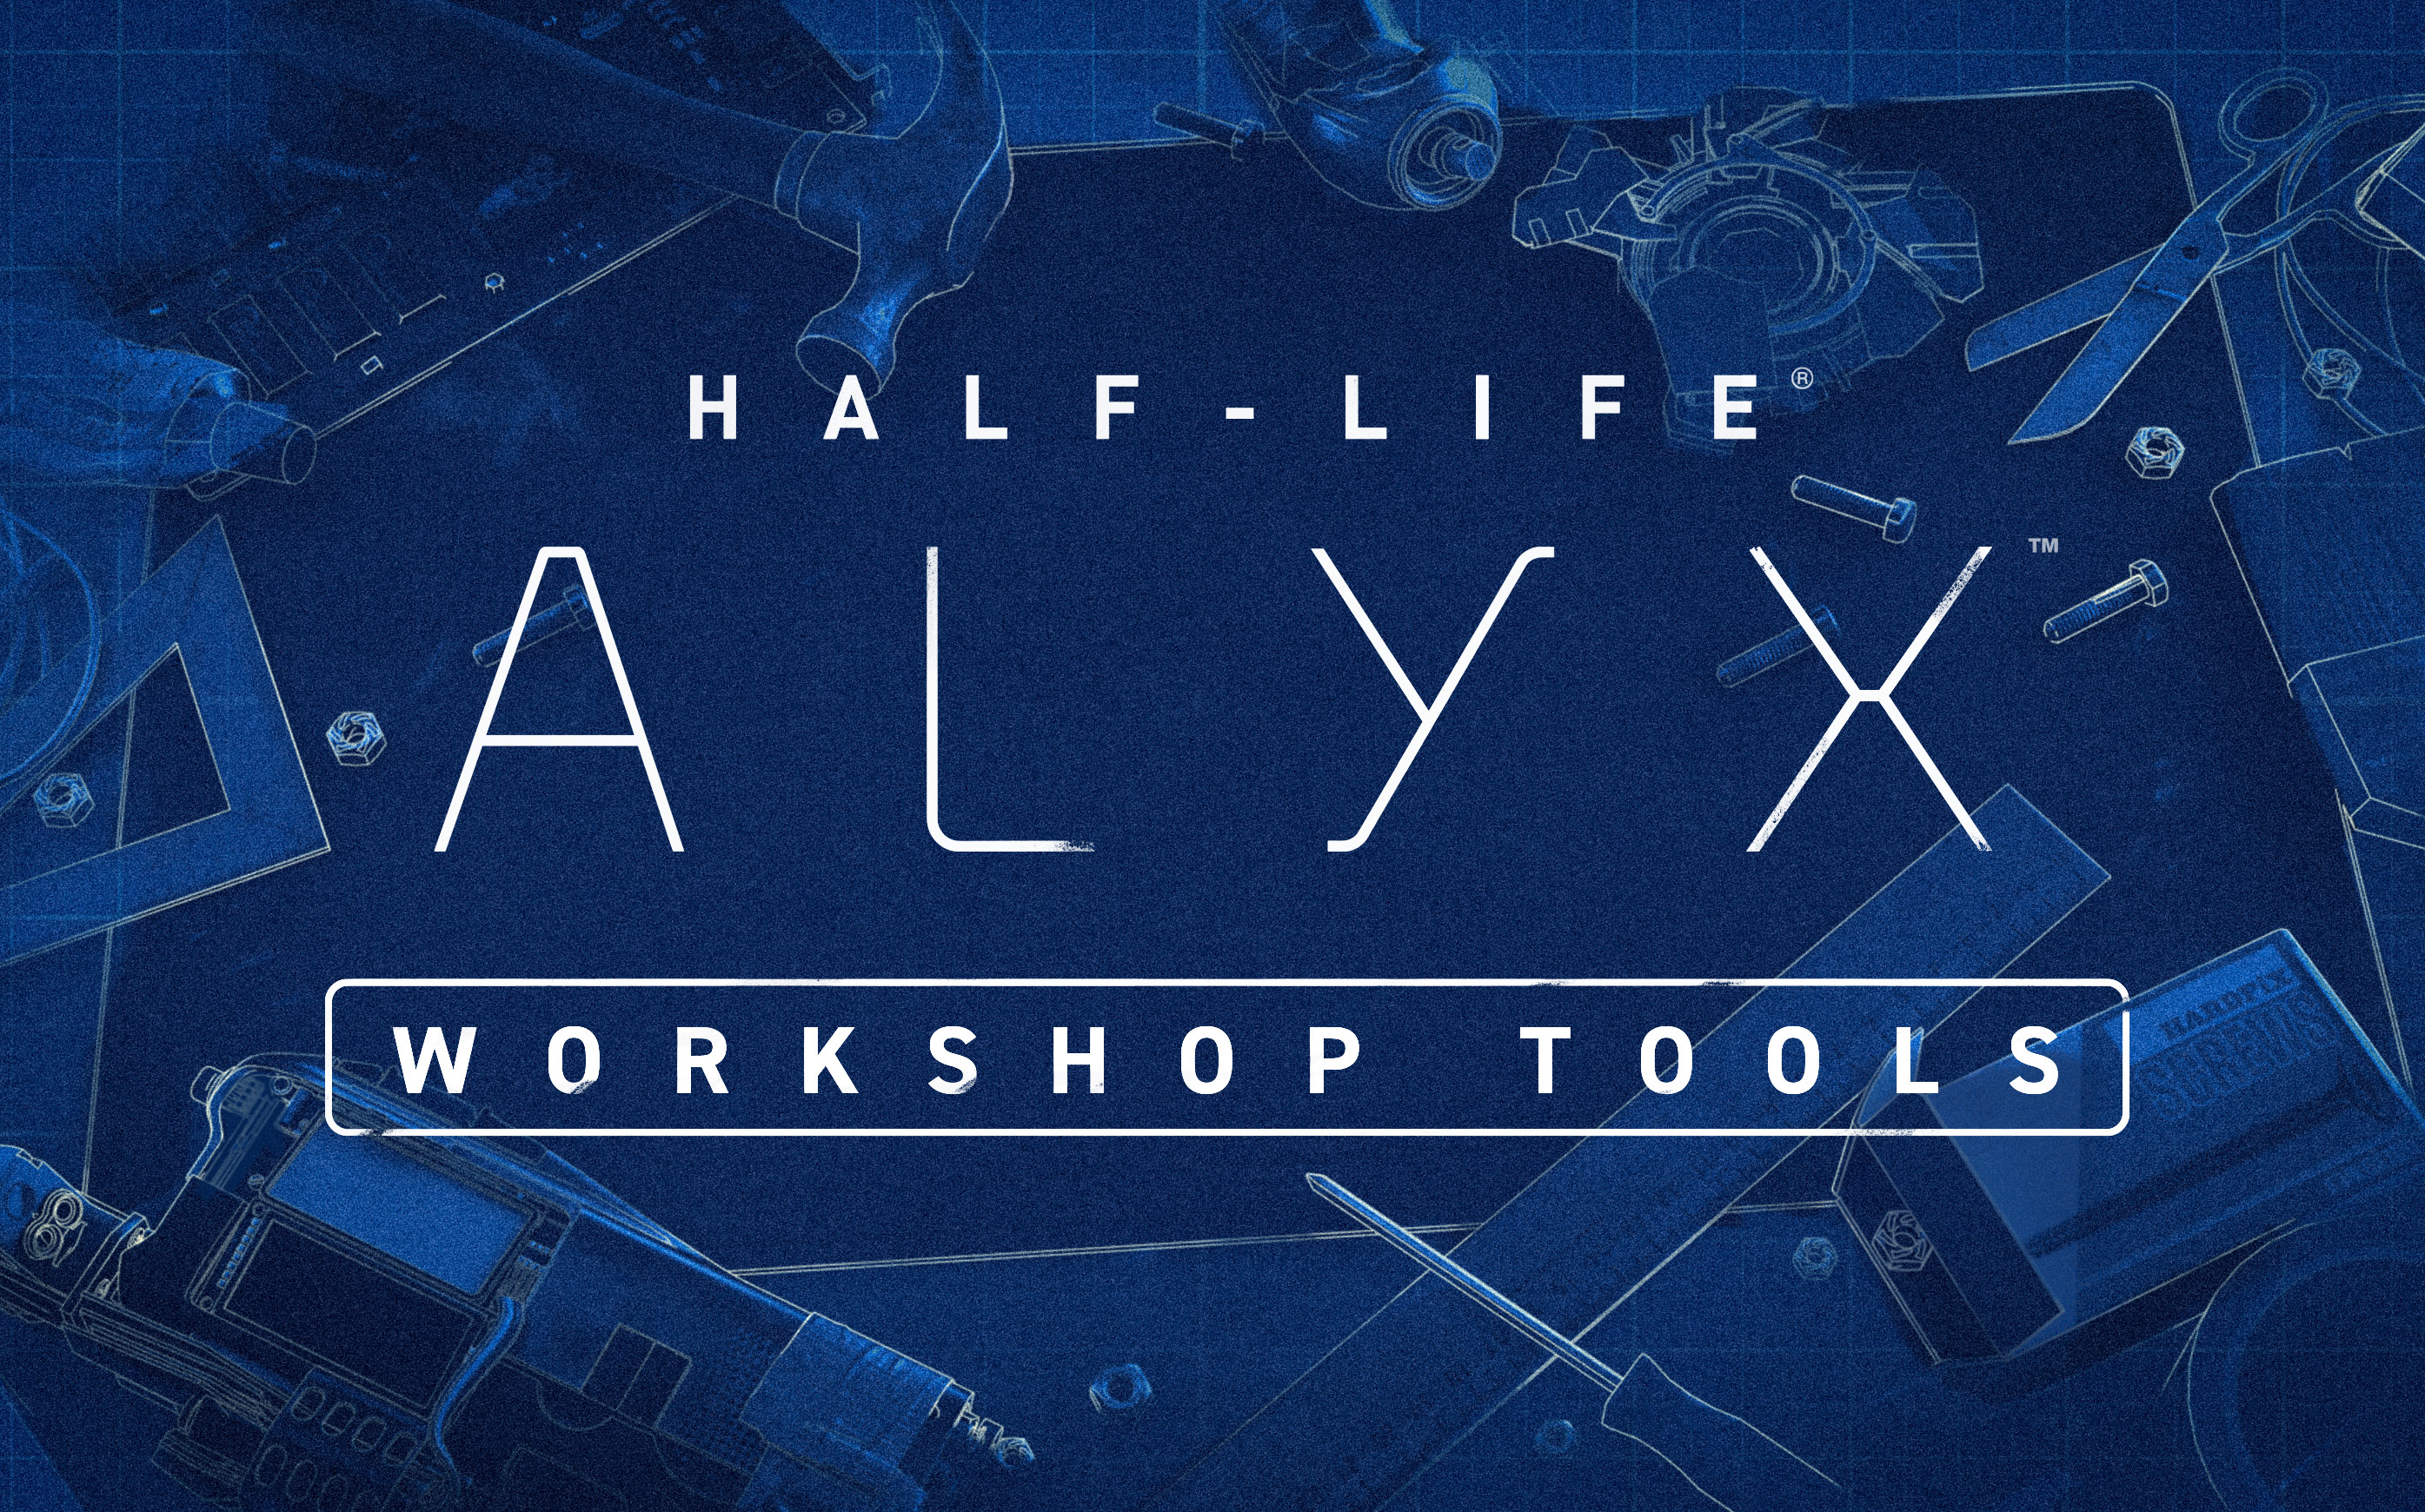 Half-Life: Alyx on Steam